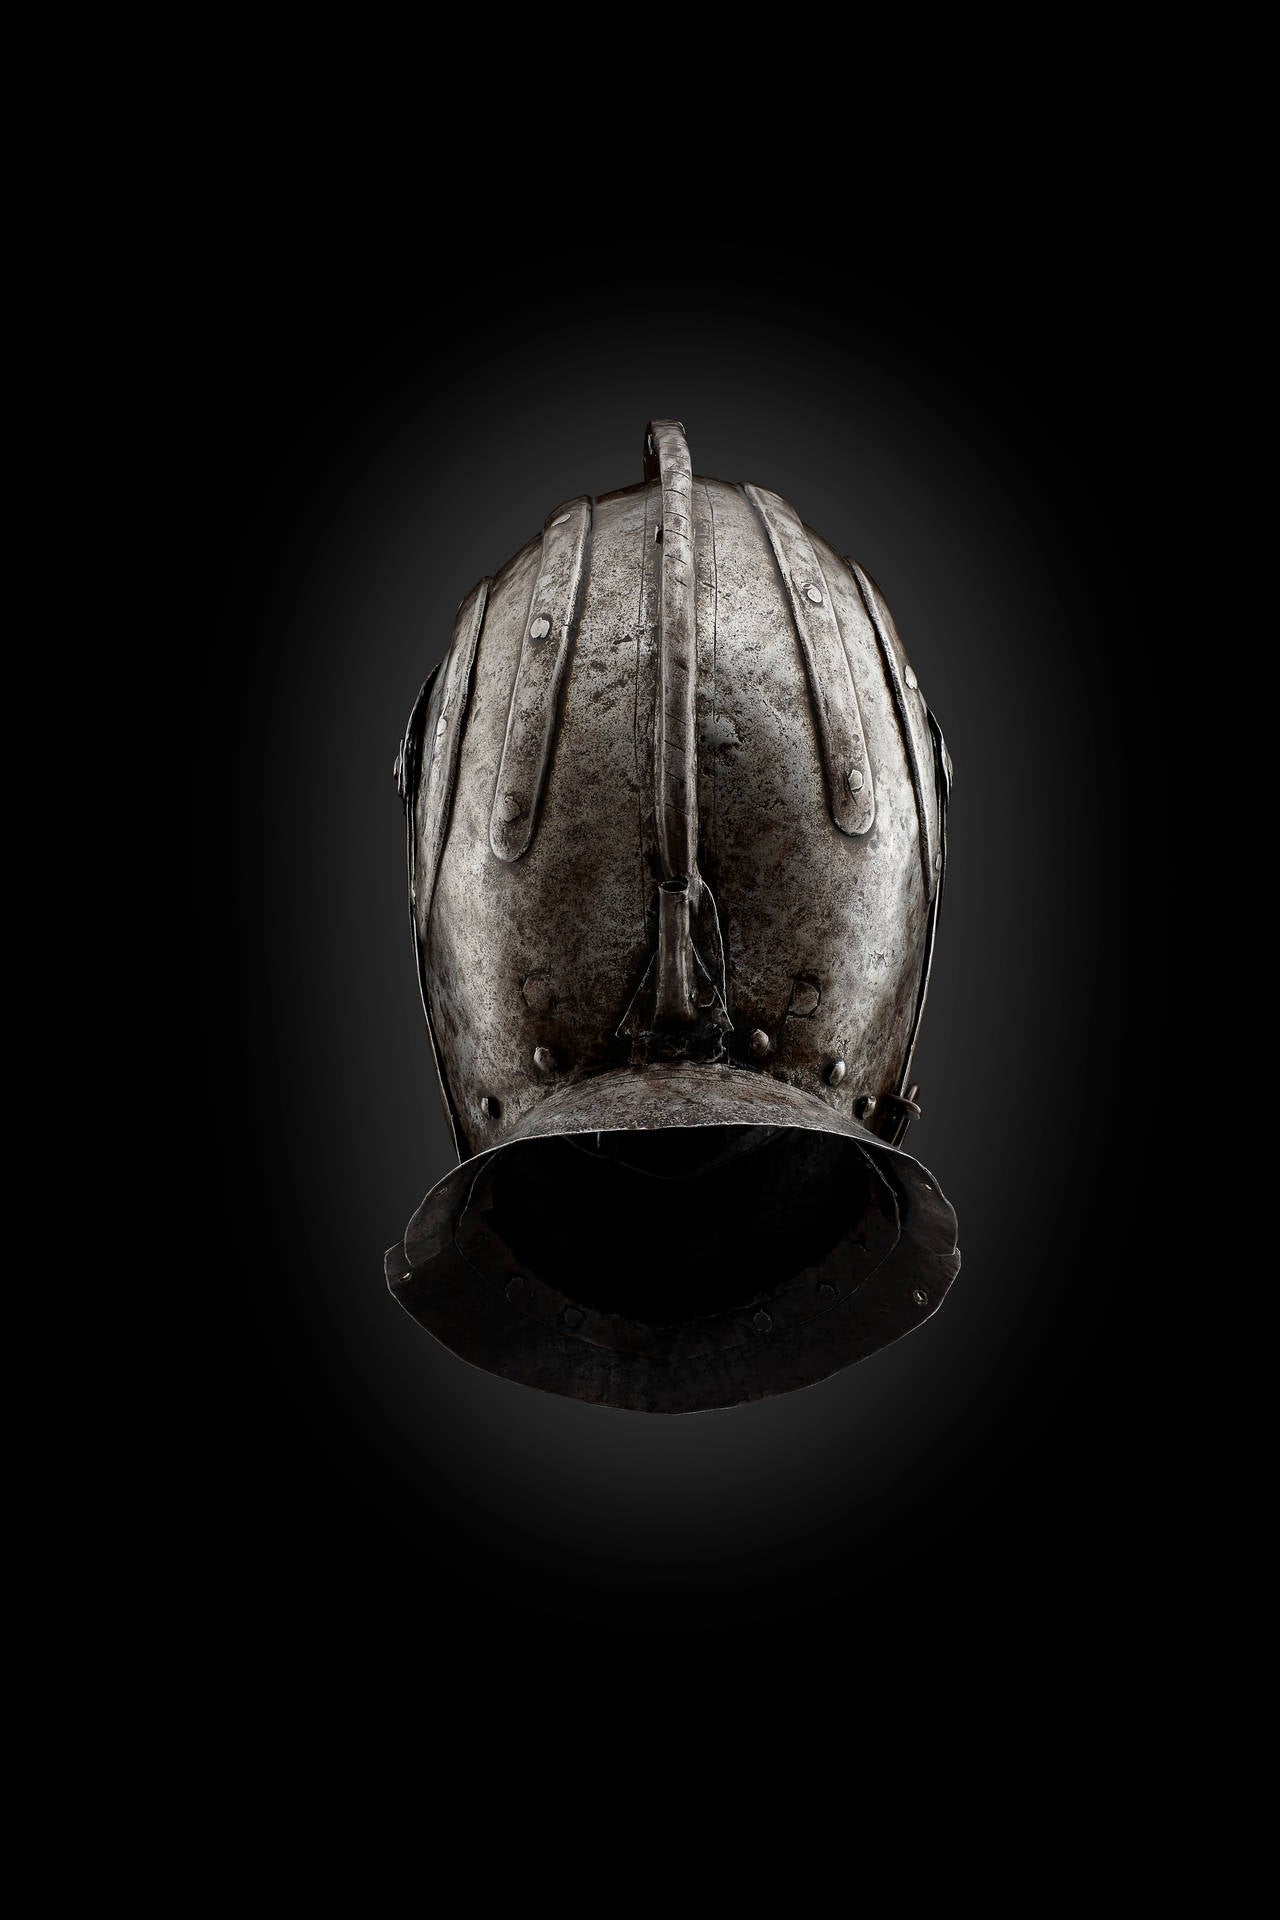 tournament helmet 1590